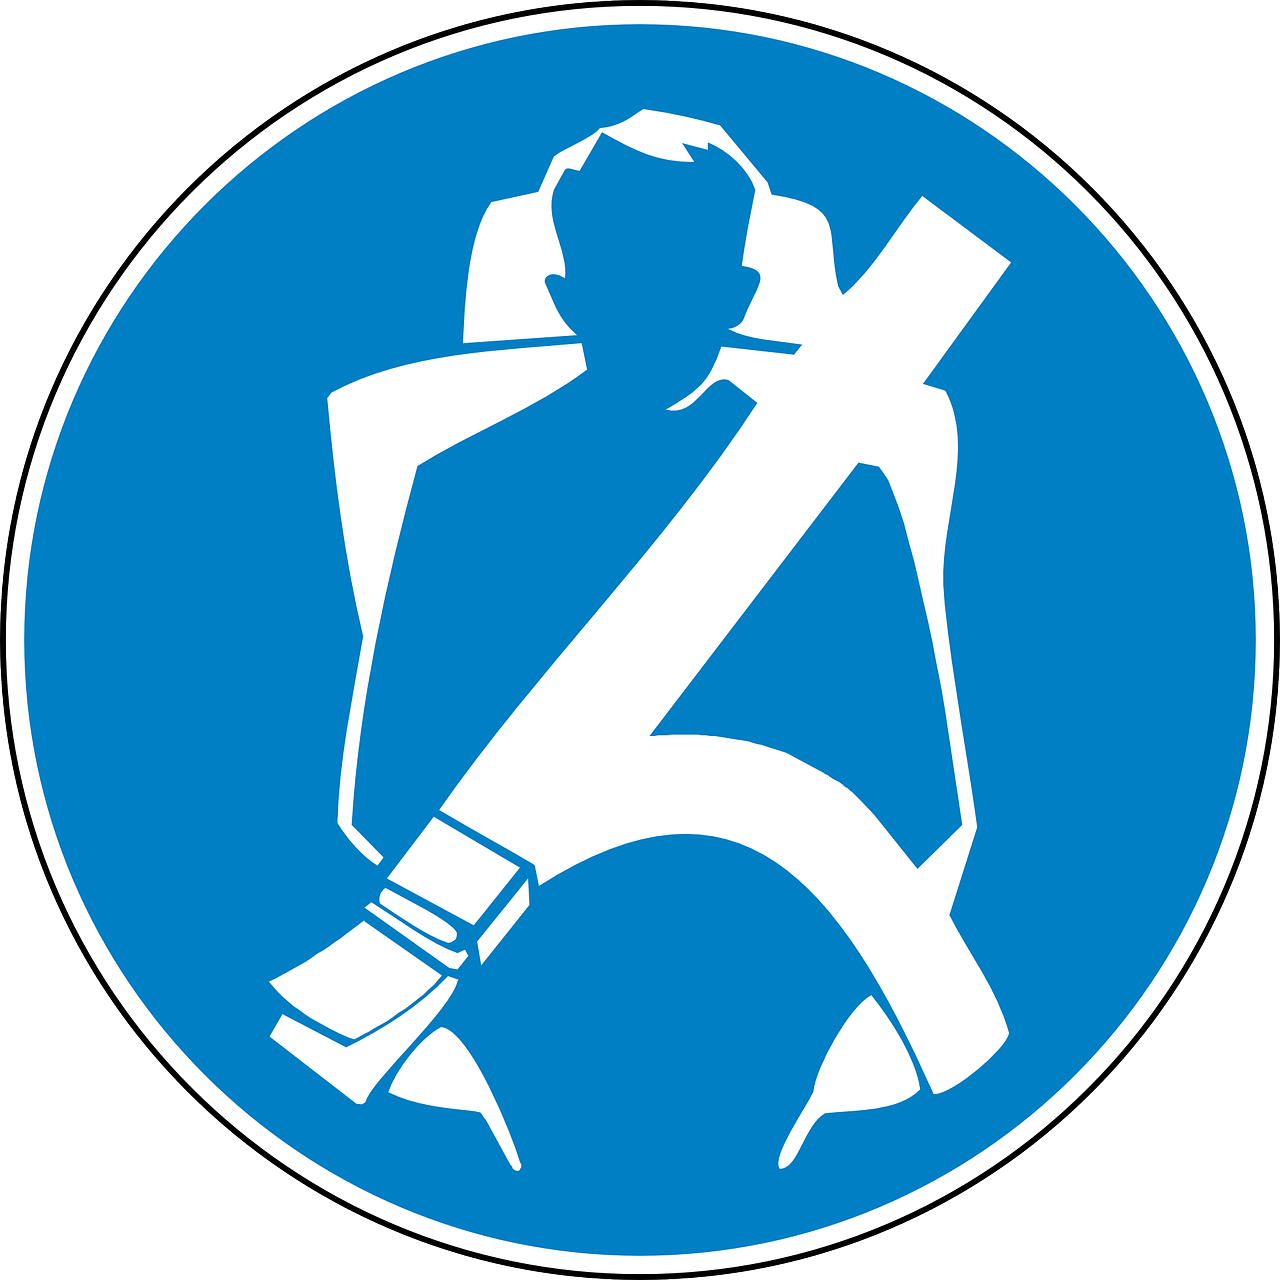 Seat Belt 98575 960 - Wearing Safety Belt Sign (1280x1280)